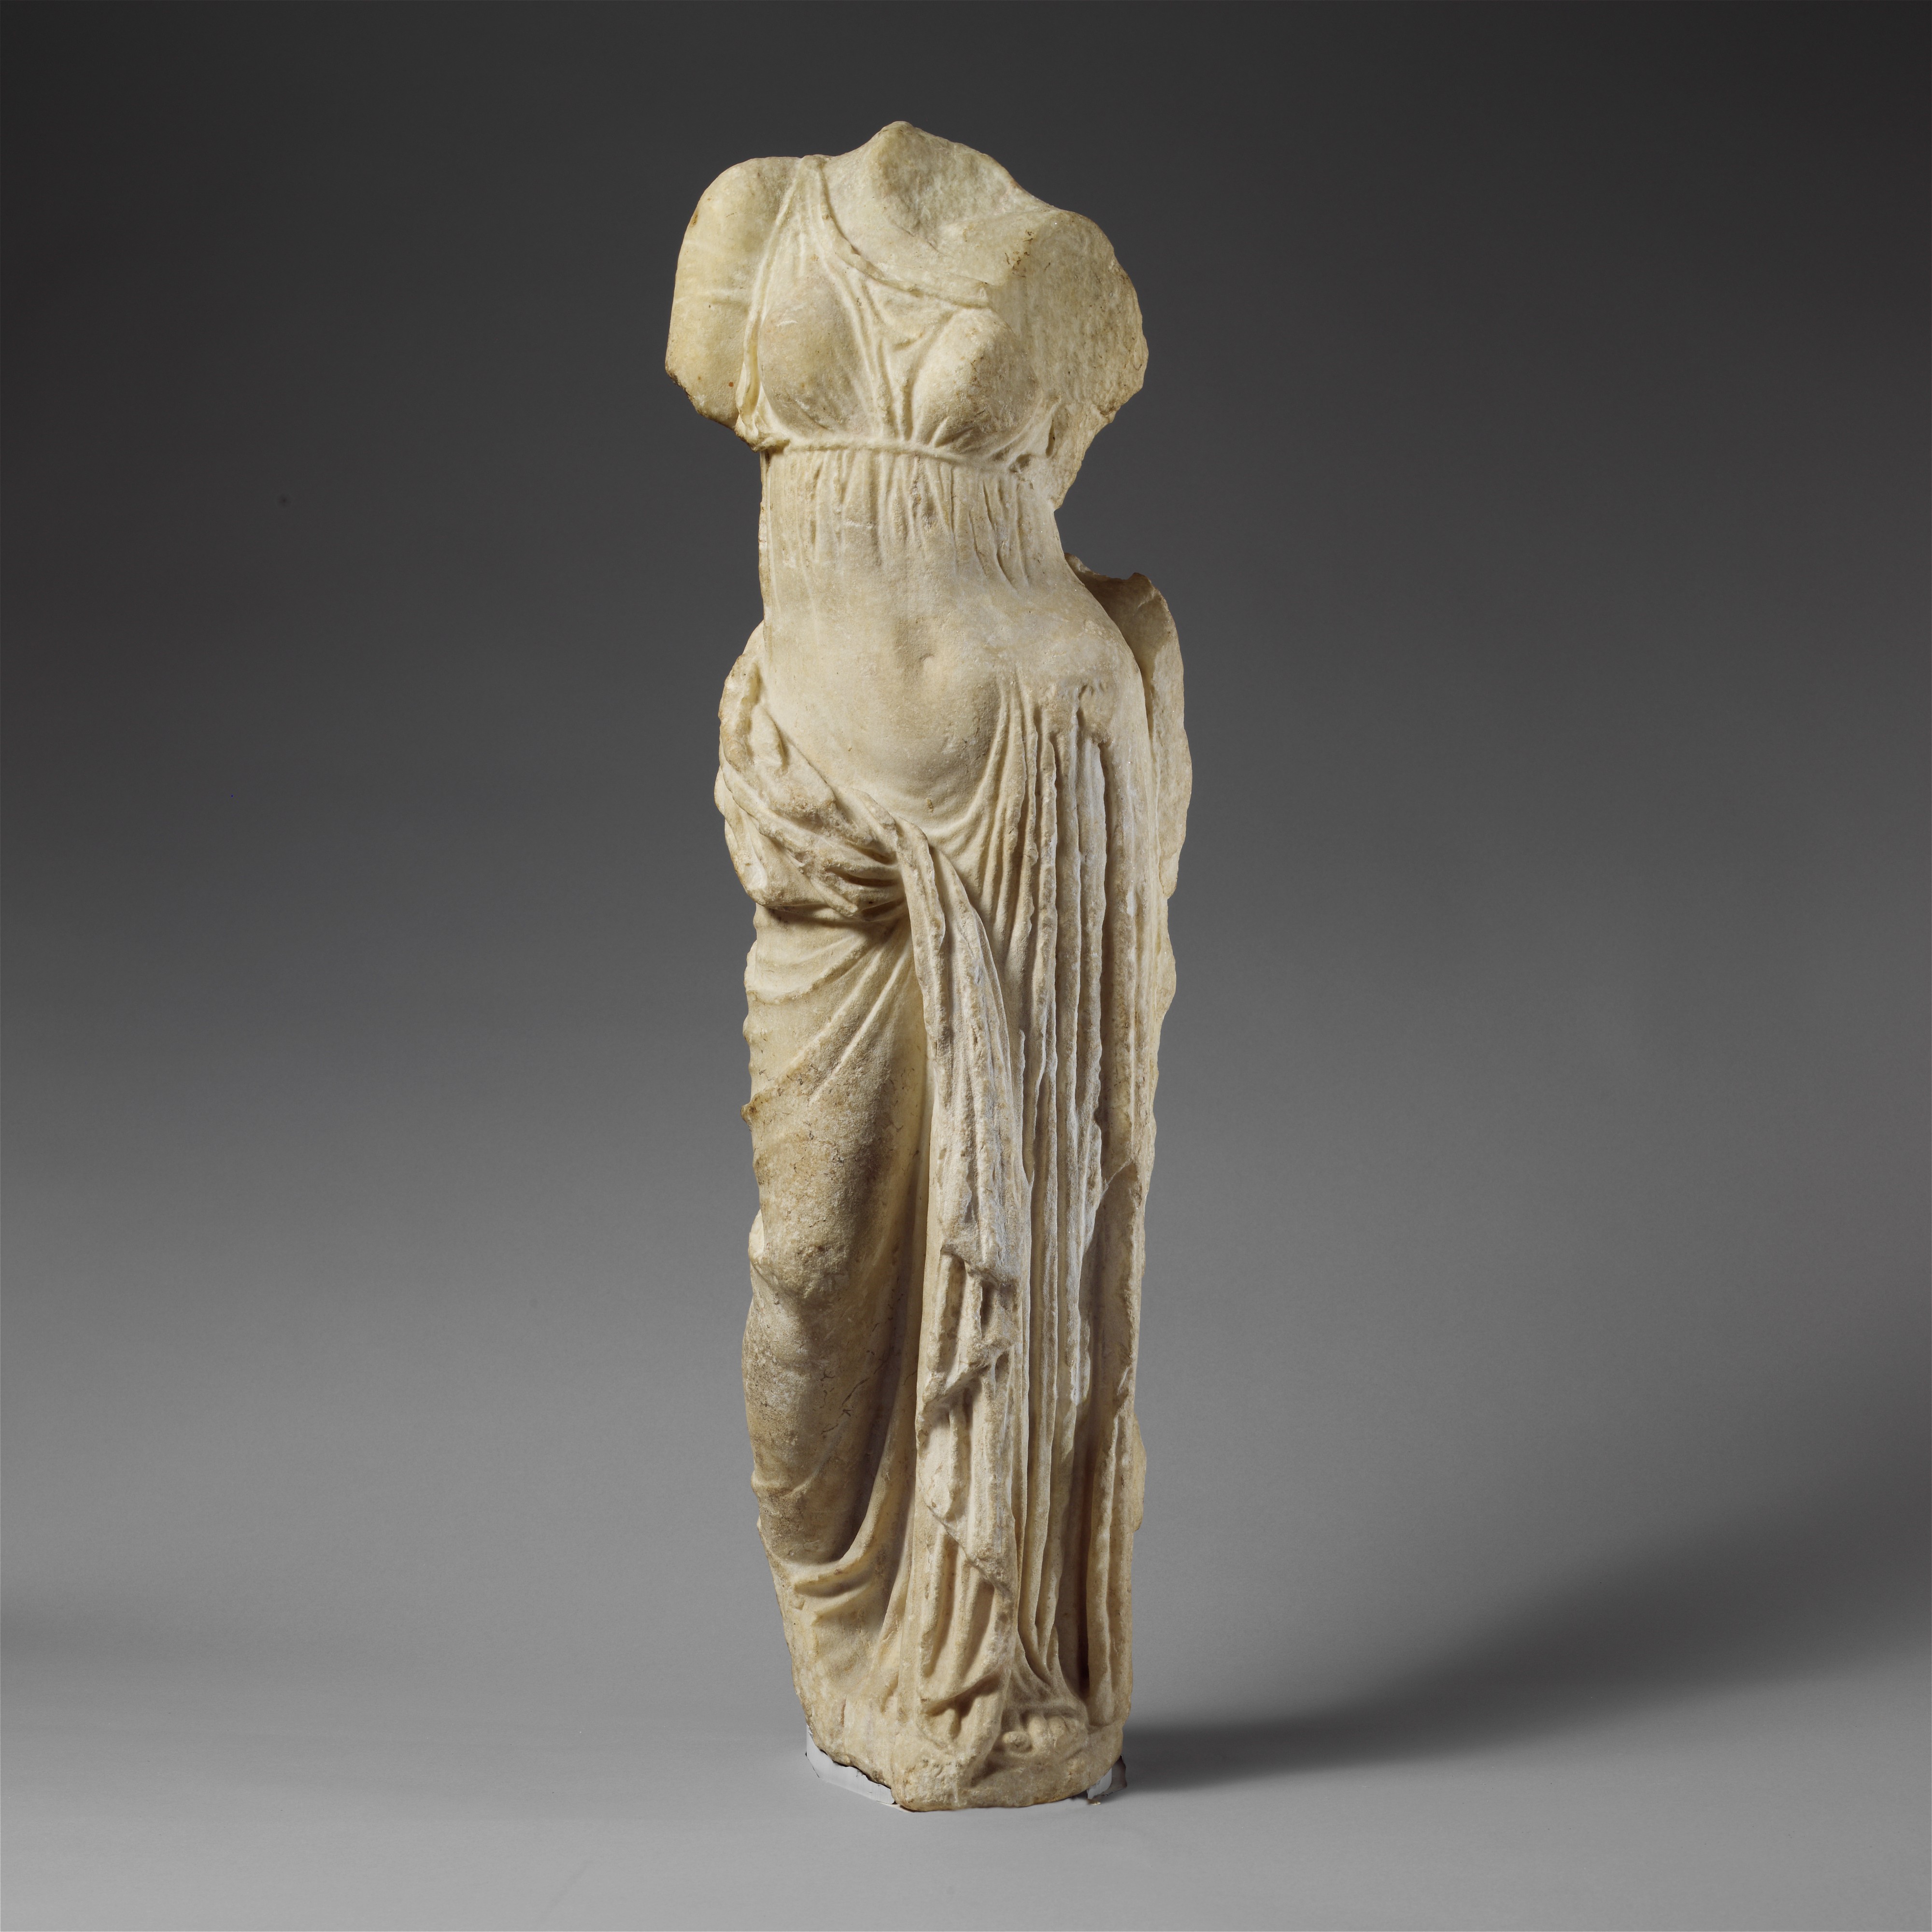 ancient greek statues of aphrodite